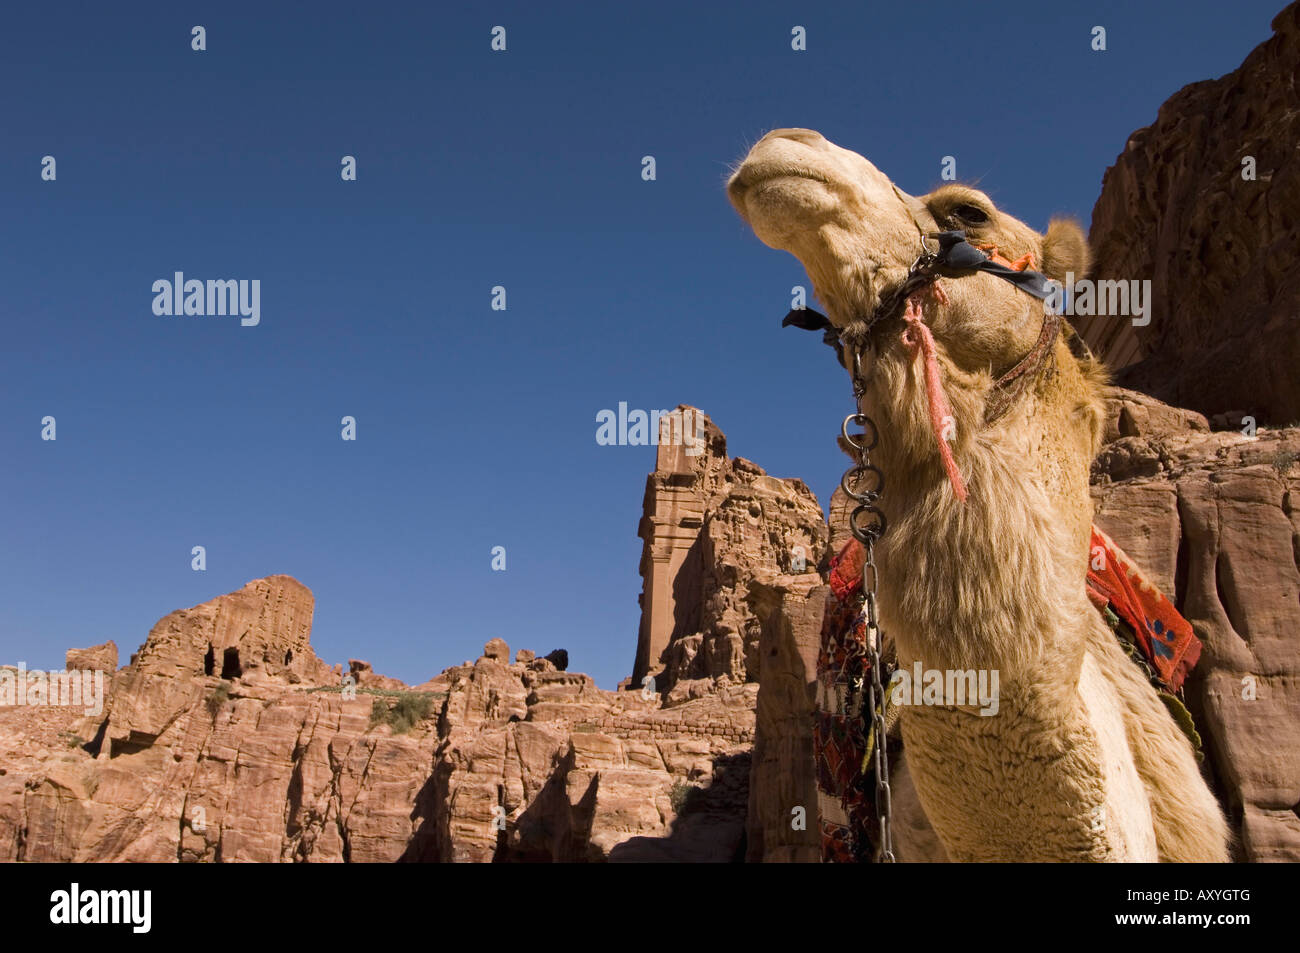 Camel, Petra, Jordan, Middle East Stock Photo